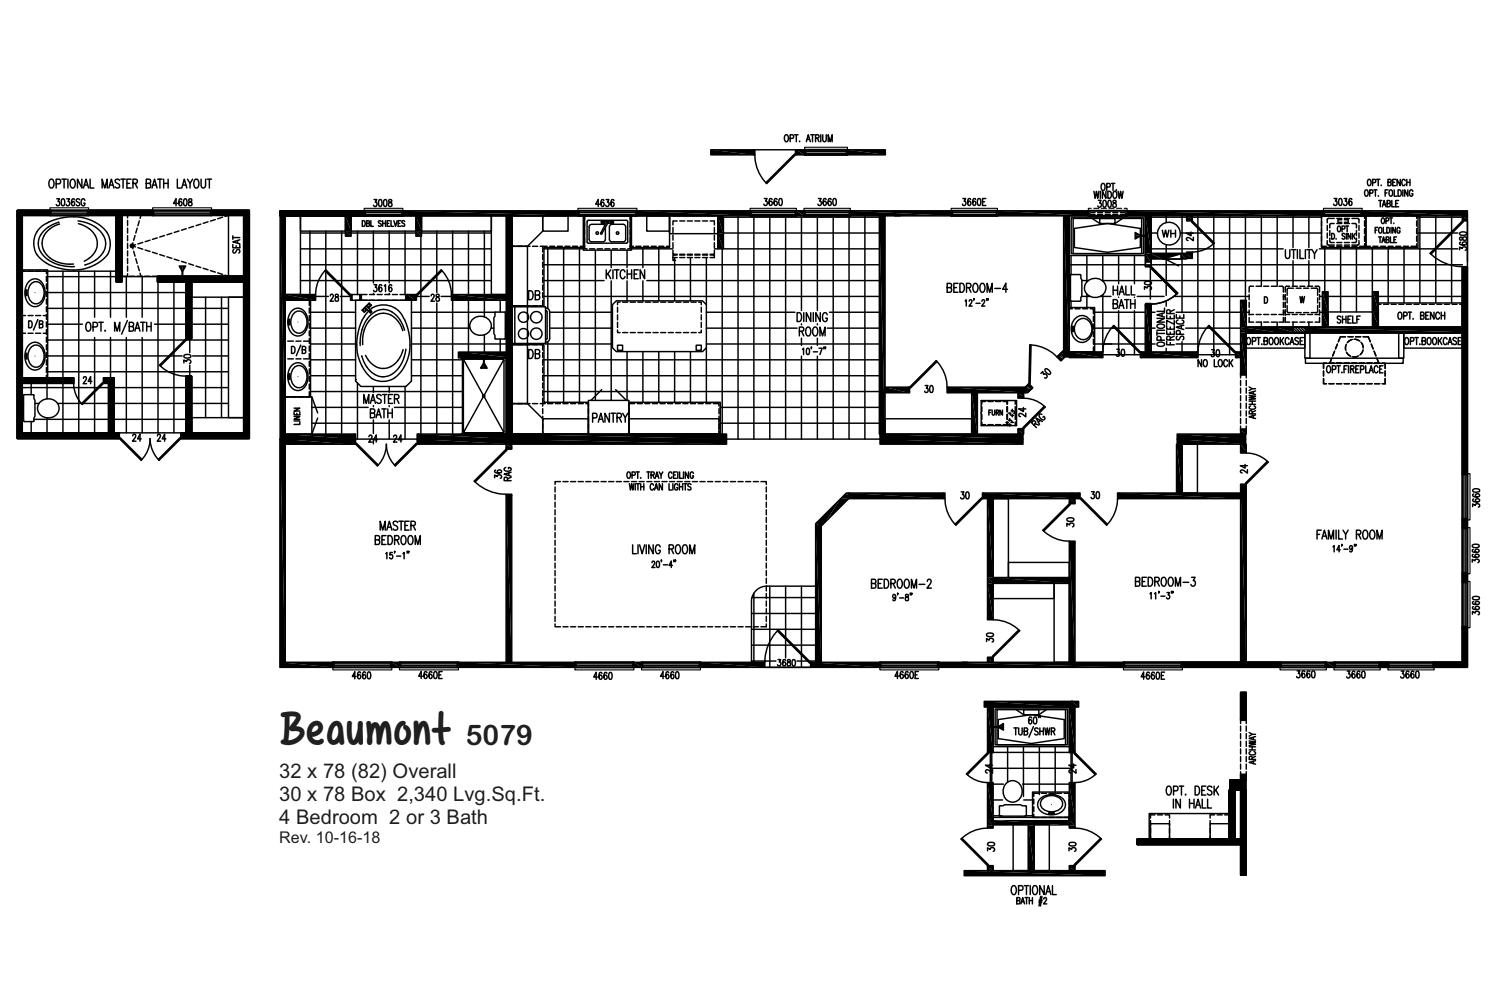 Beaumont 5079 Floorplan